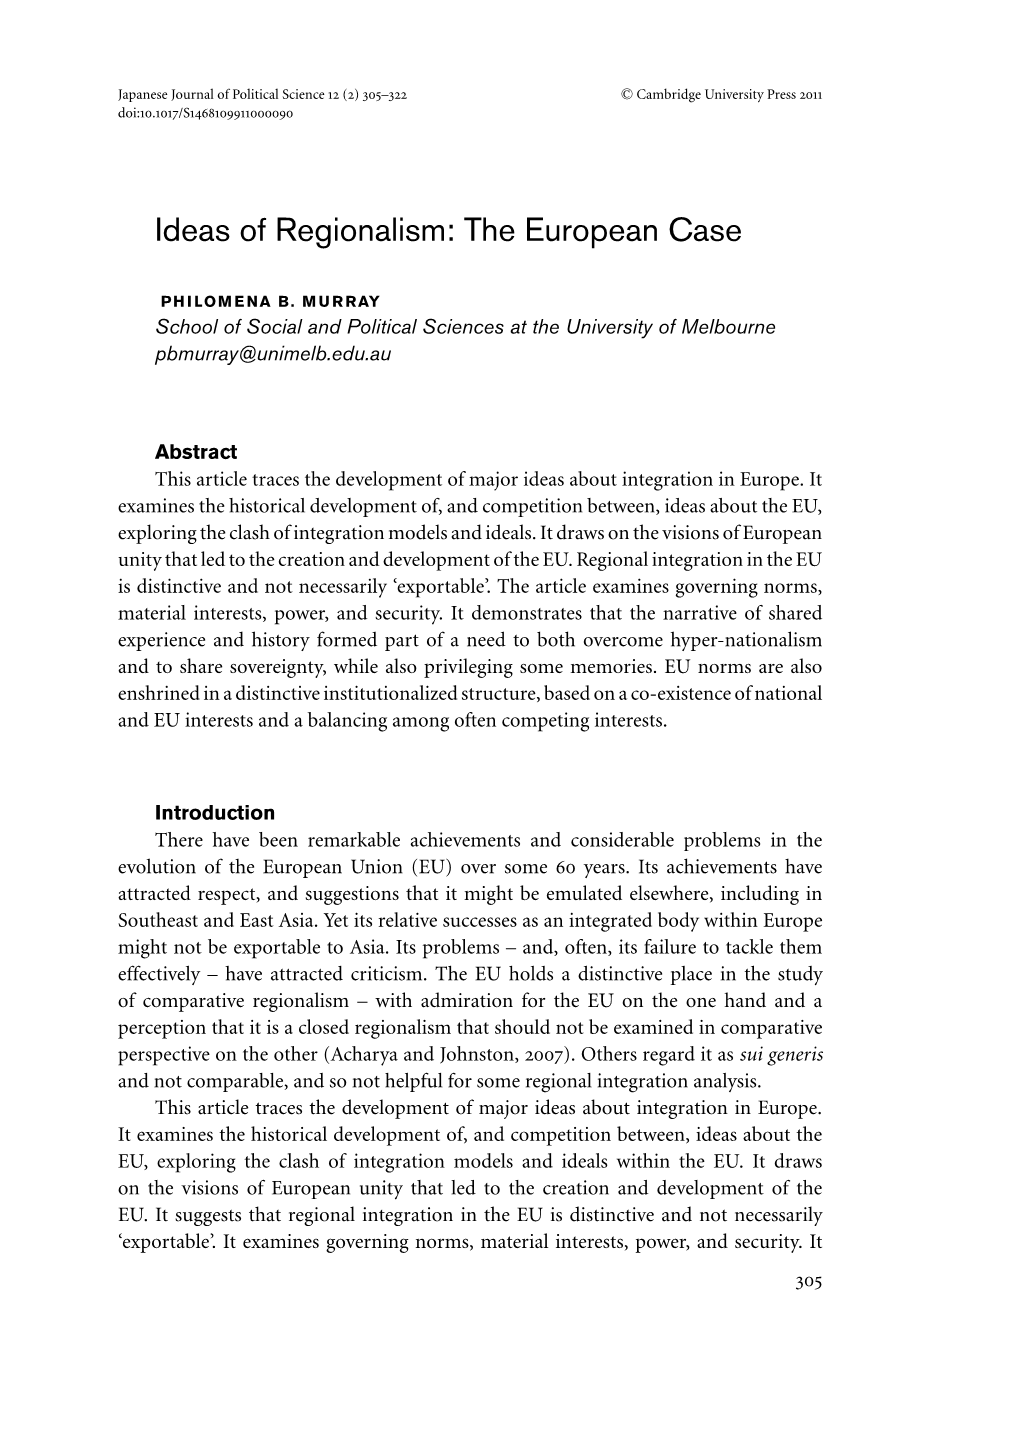 Ideas of Regionalism: the European Case